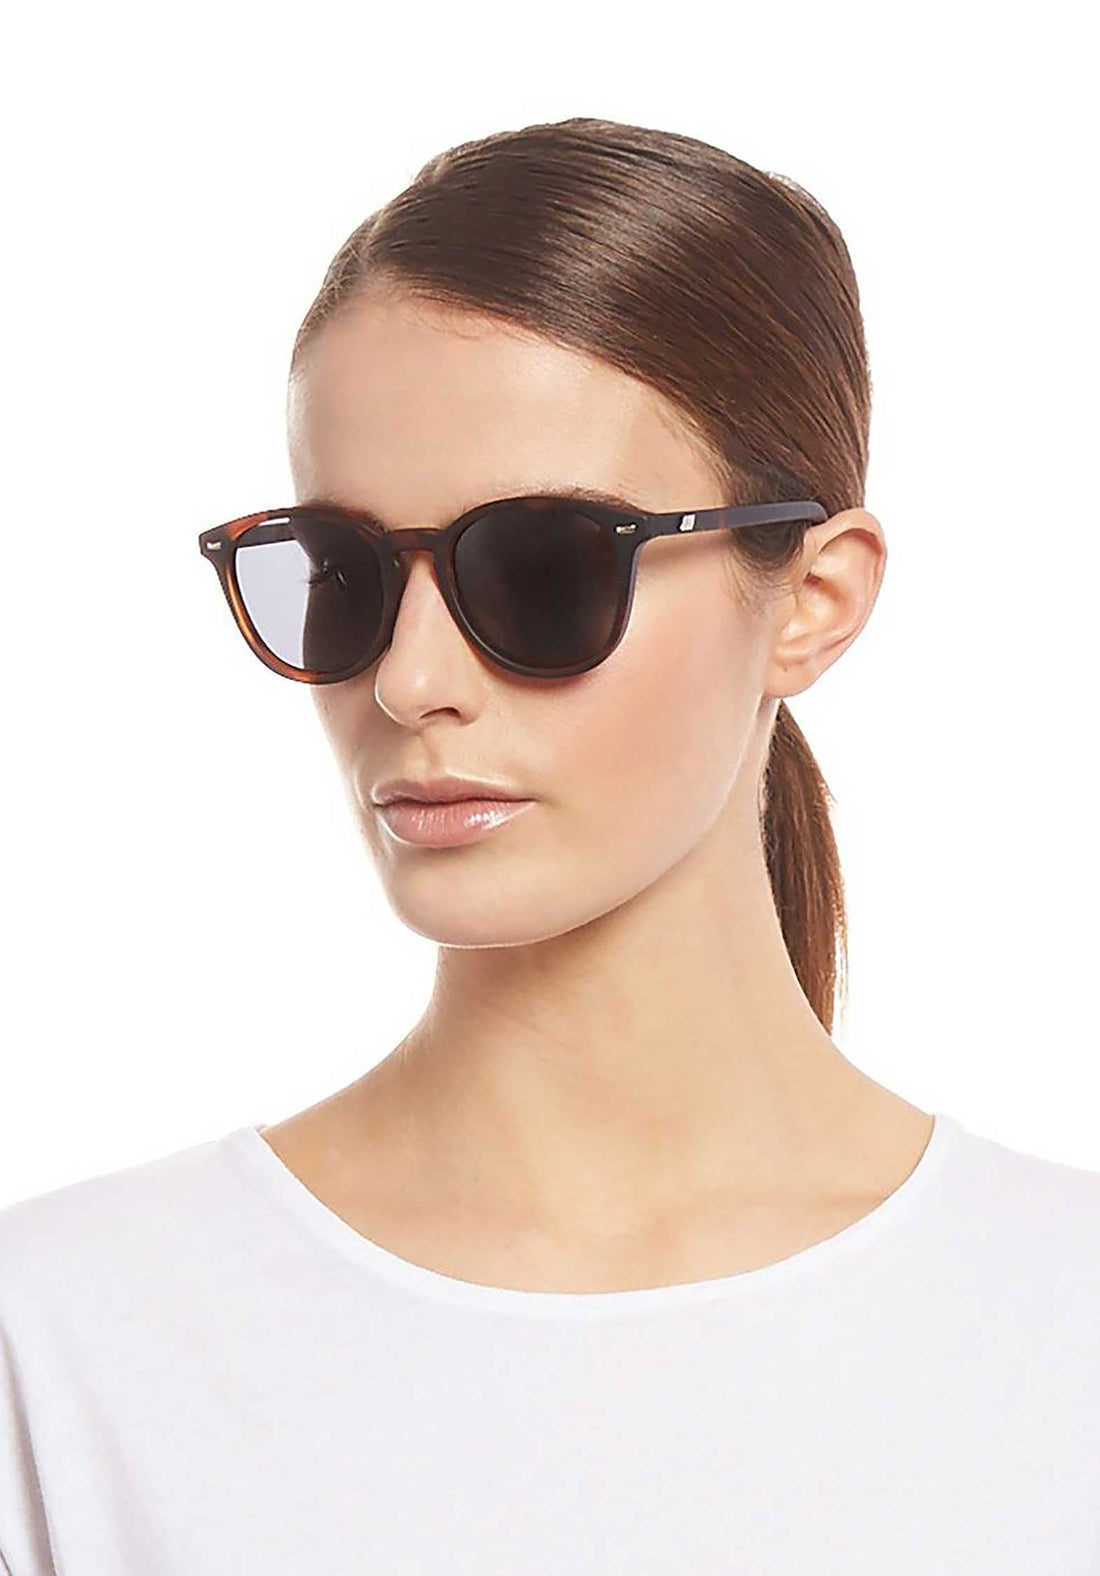 Sunglasses Bandwagon Bandwagon 150212 Matte-Tort